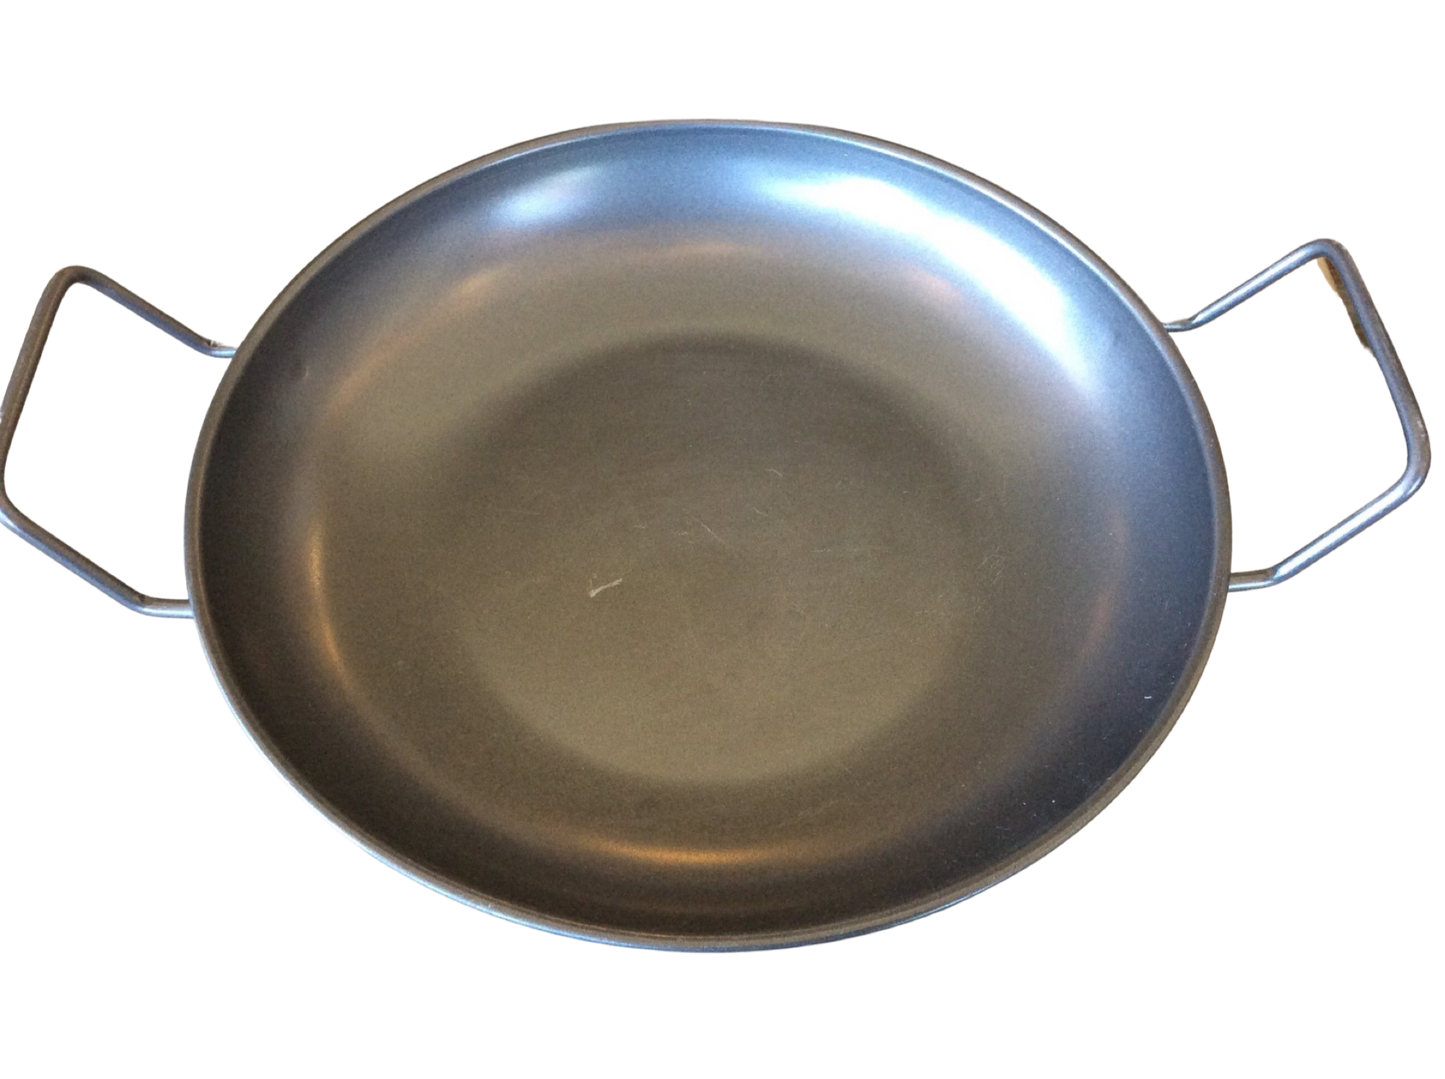 Medium size pan.